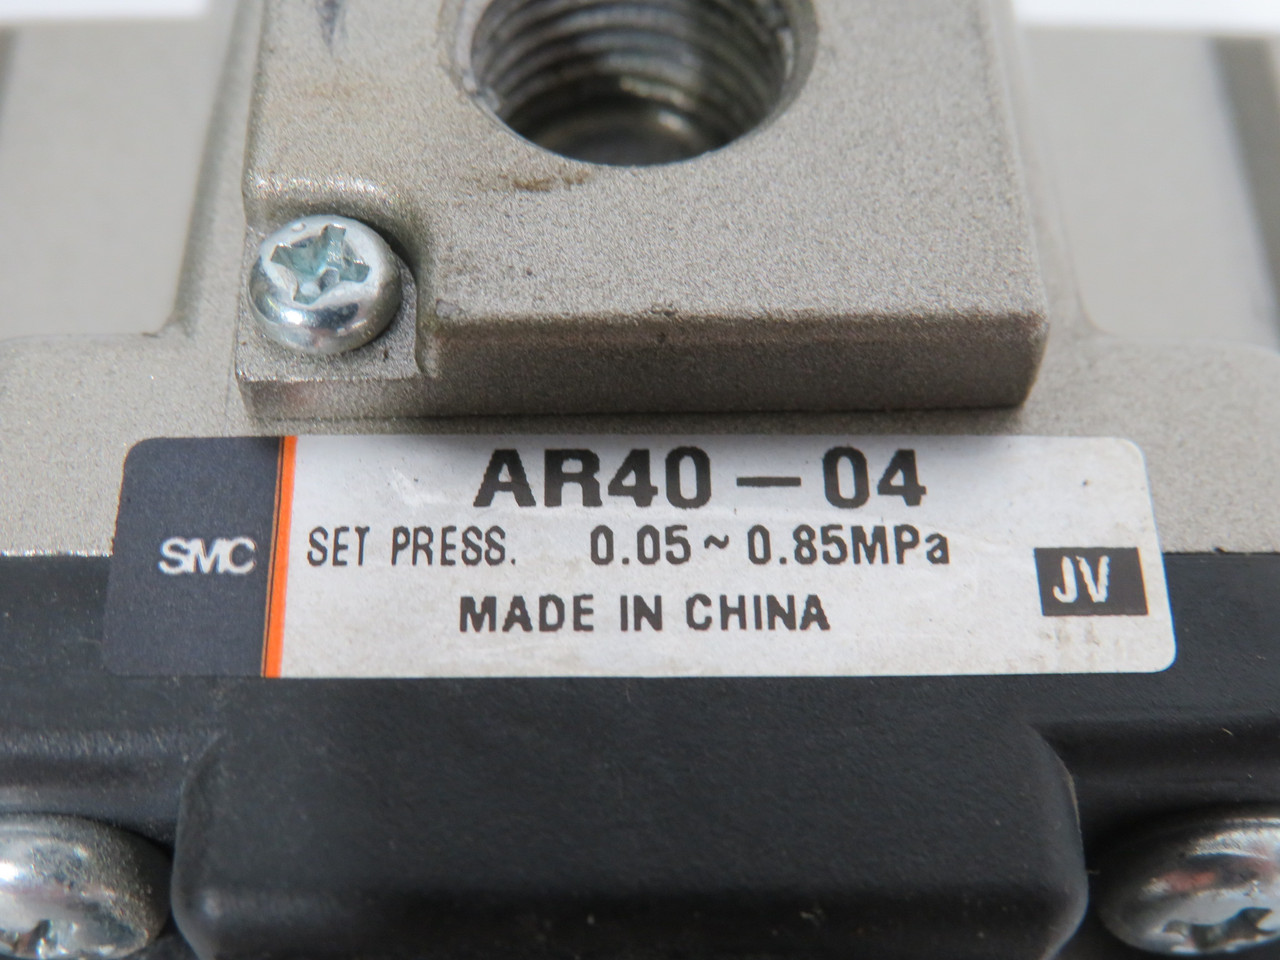 SMC AR40-04 Modular Pressure Regulator w/o Gauge 1/2" NPT *COS DMG* USED